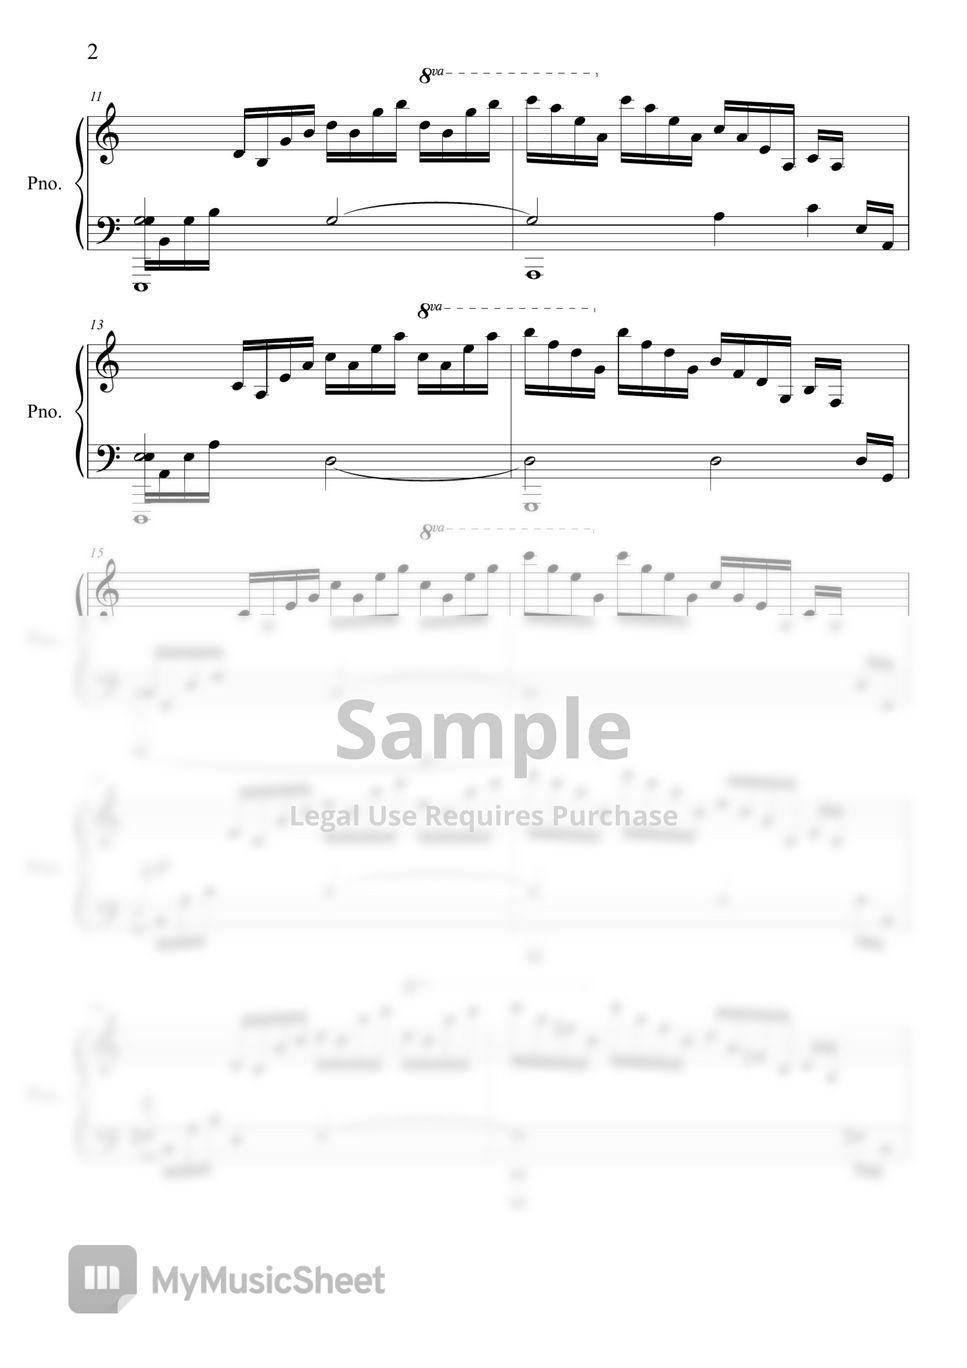 Cgioub - Etude No.1 Cover by hn piano